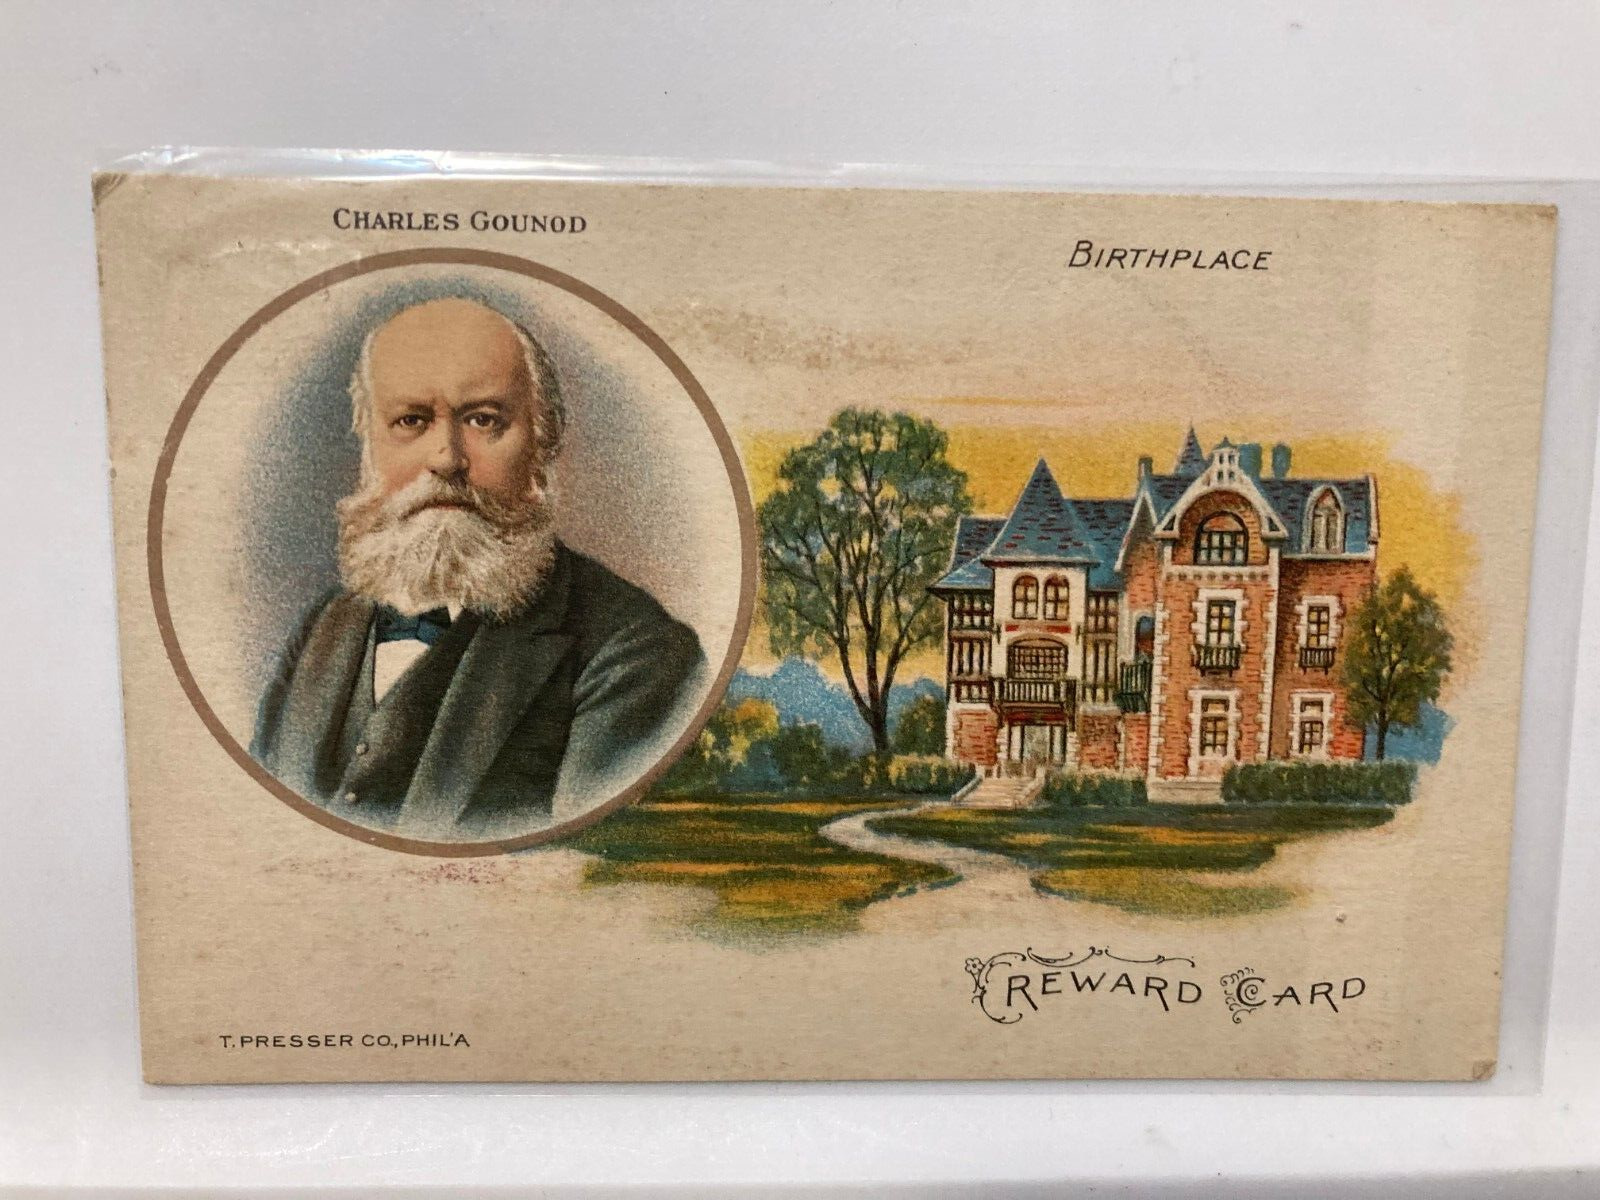 CHARLES GOUNOD (1818-1893) PARIS FRANCE COMPOSER MUSIC REWARD CARD (c.1930s)